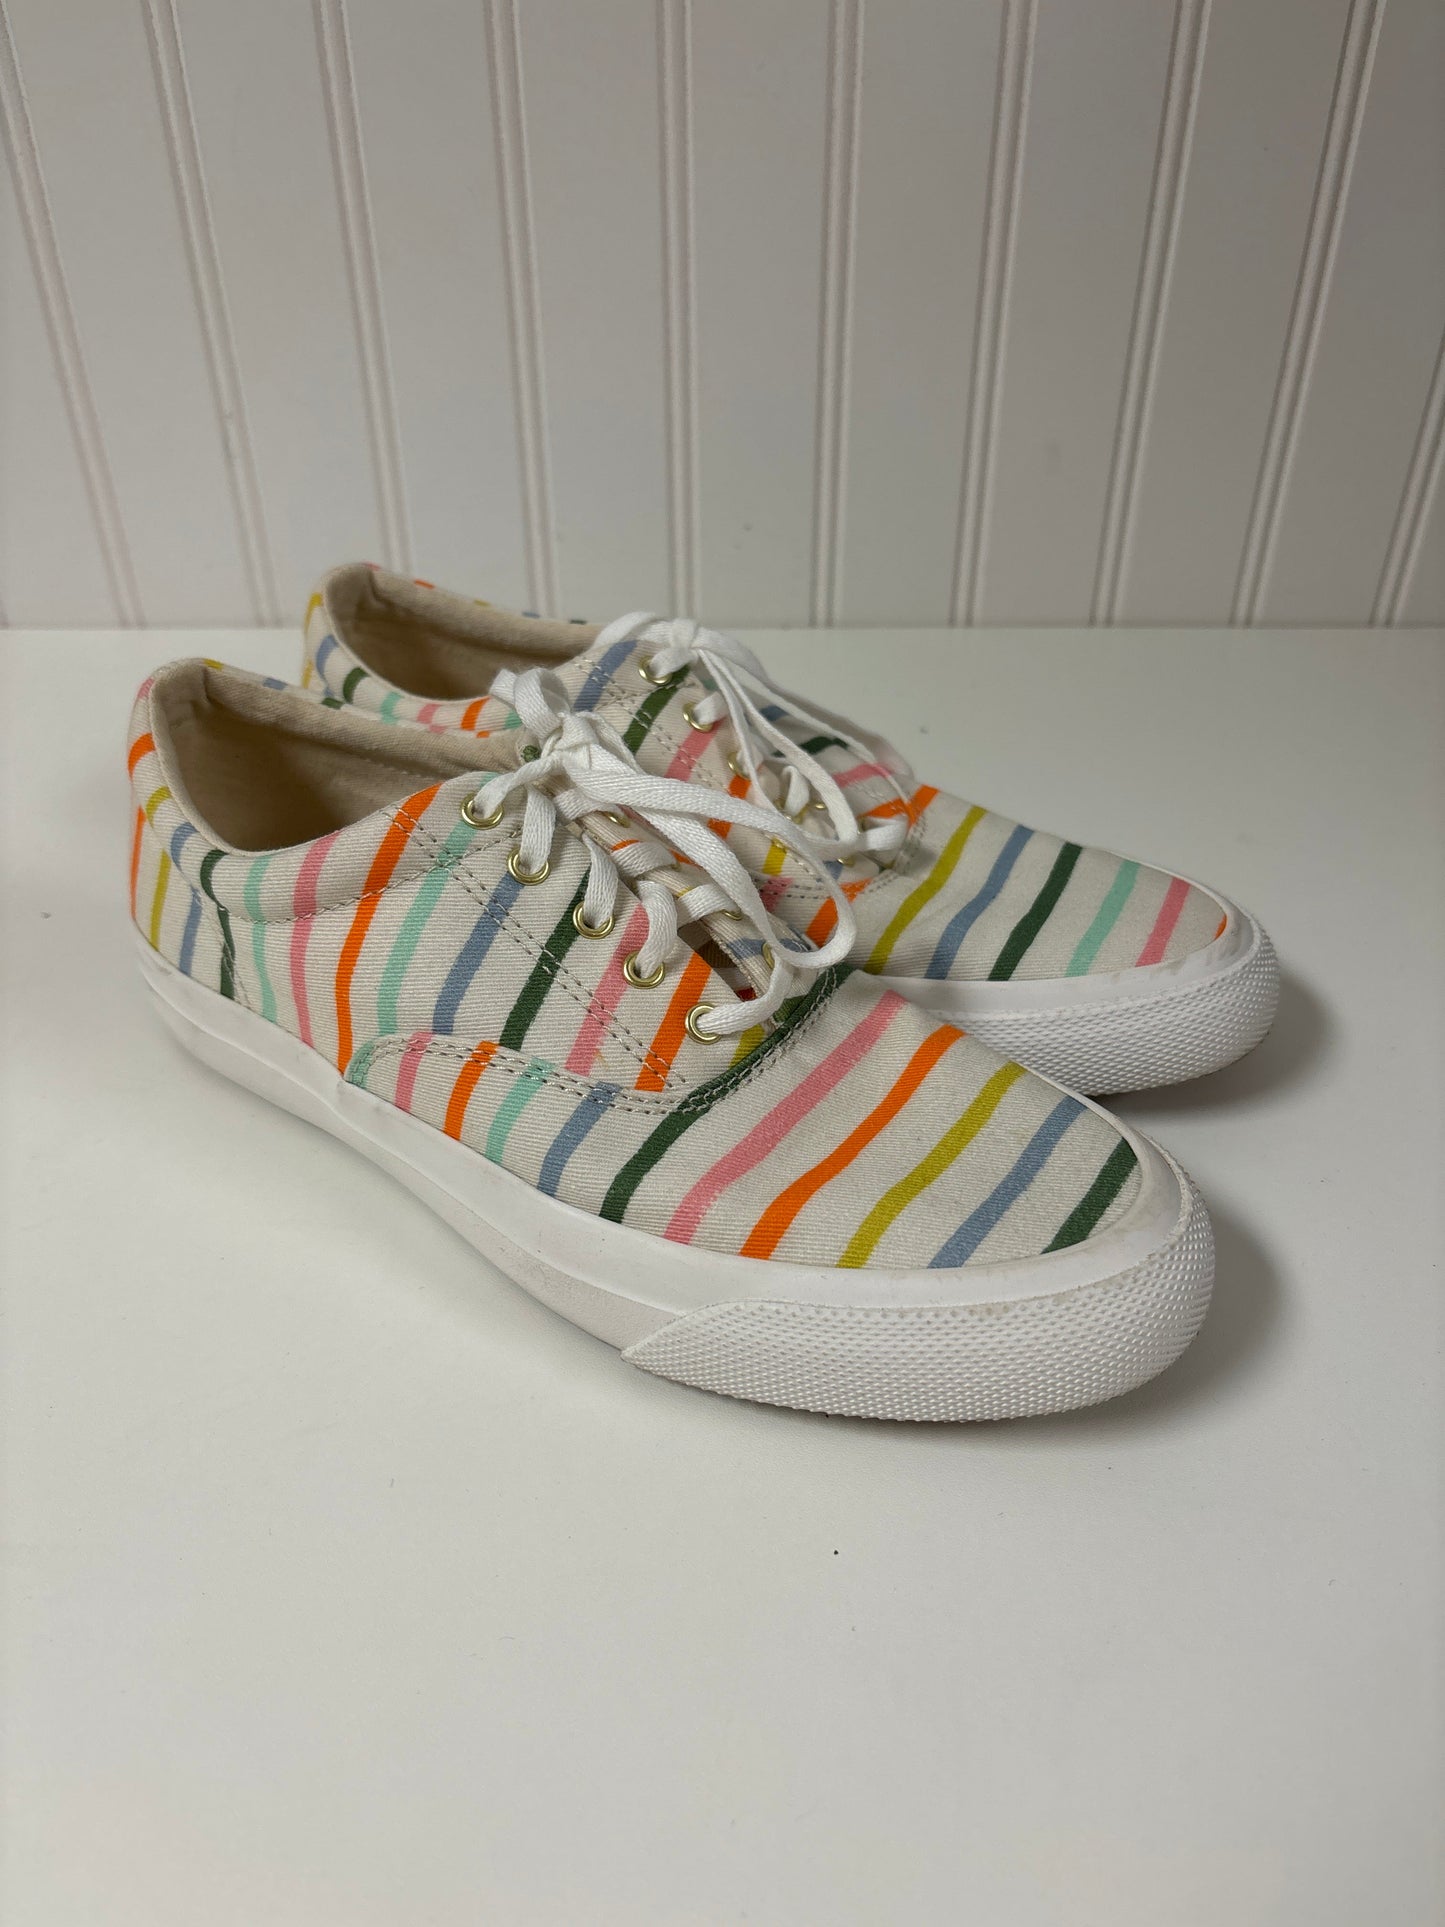 Striped Pattern Shoes Flats Keds, Size 6